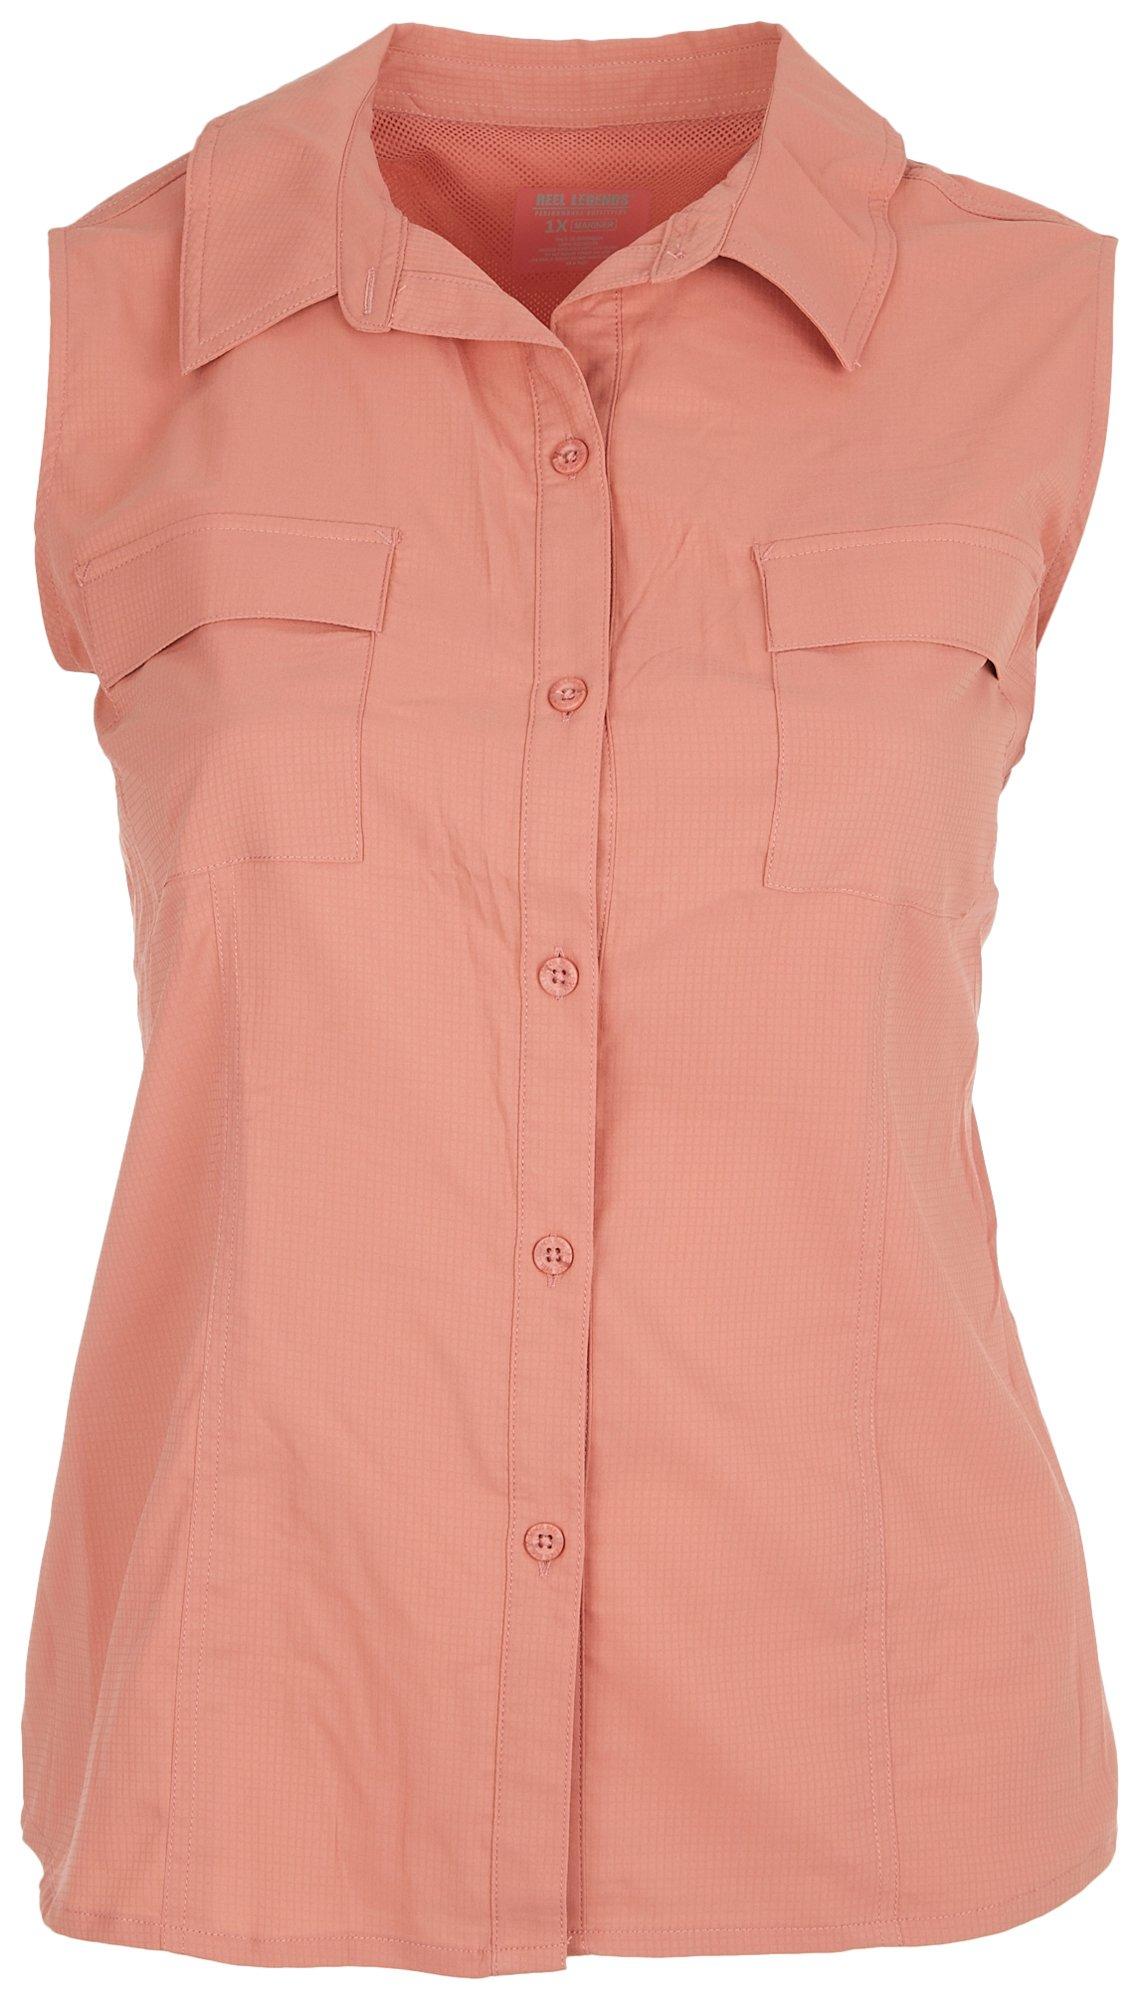 Fashion Bug Women's Button Up Top Plus Size 18/20W Pink White